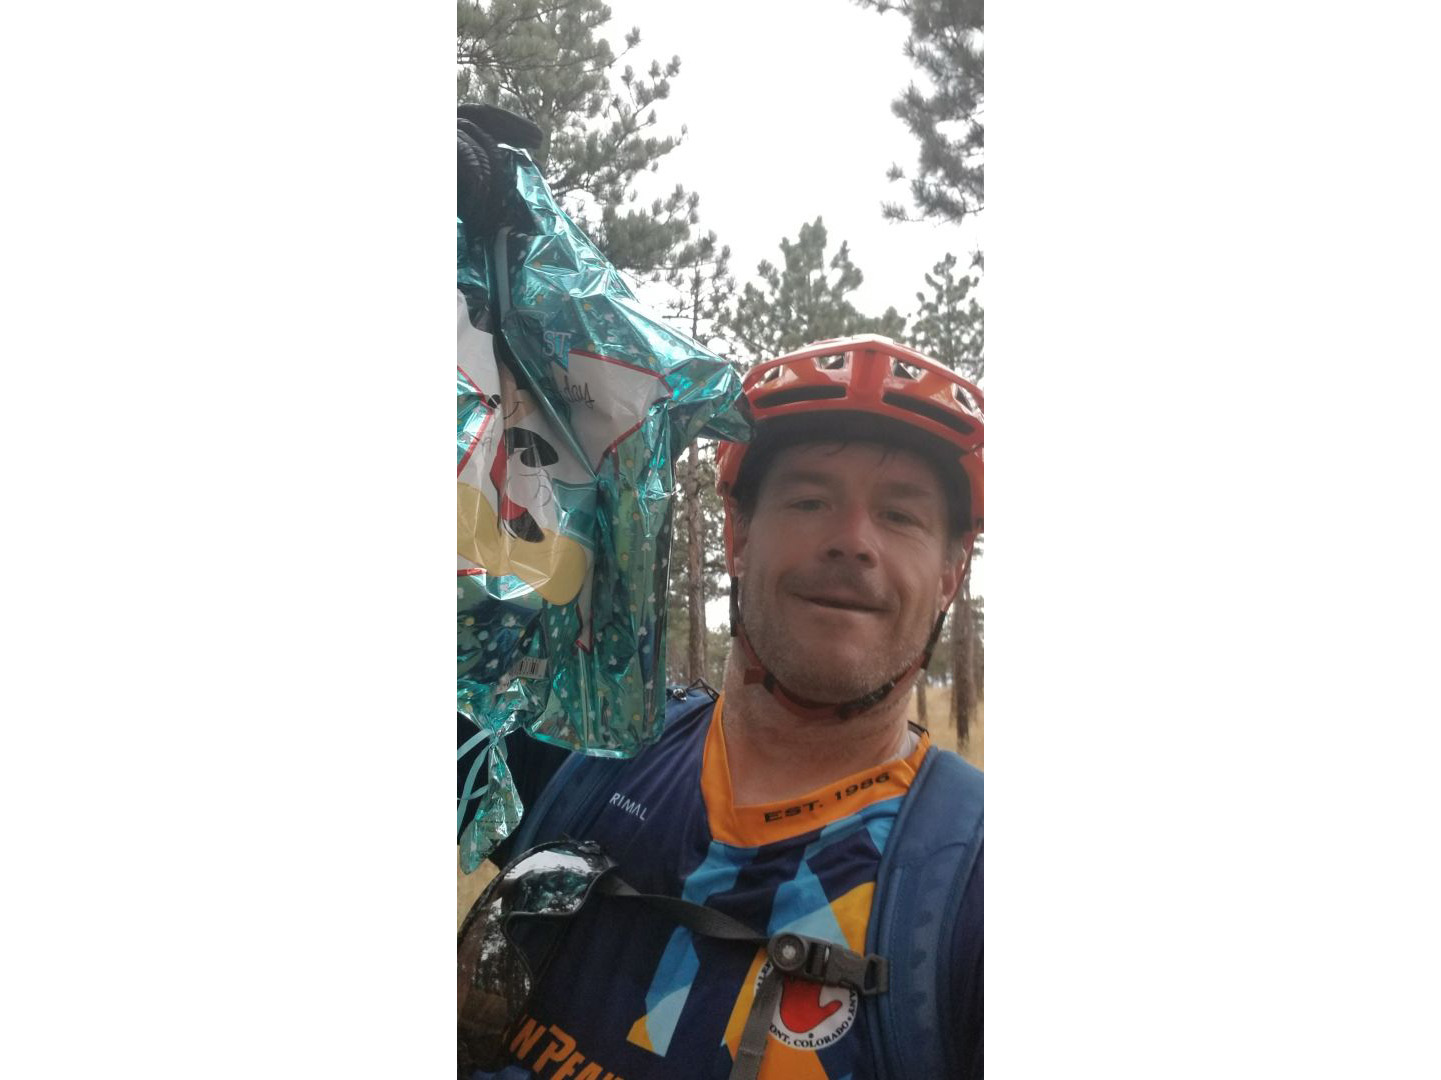 Mountain biker holding up a bag of trash